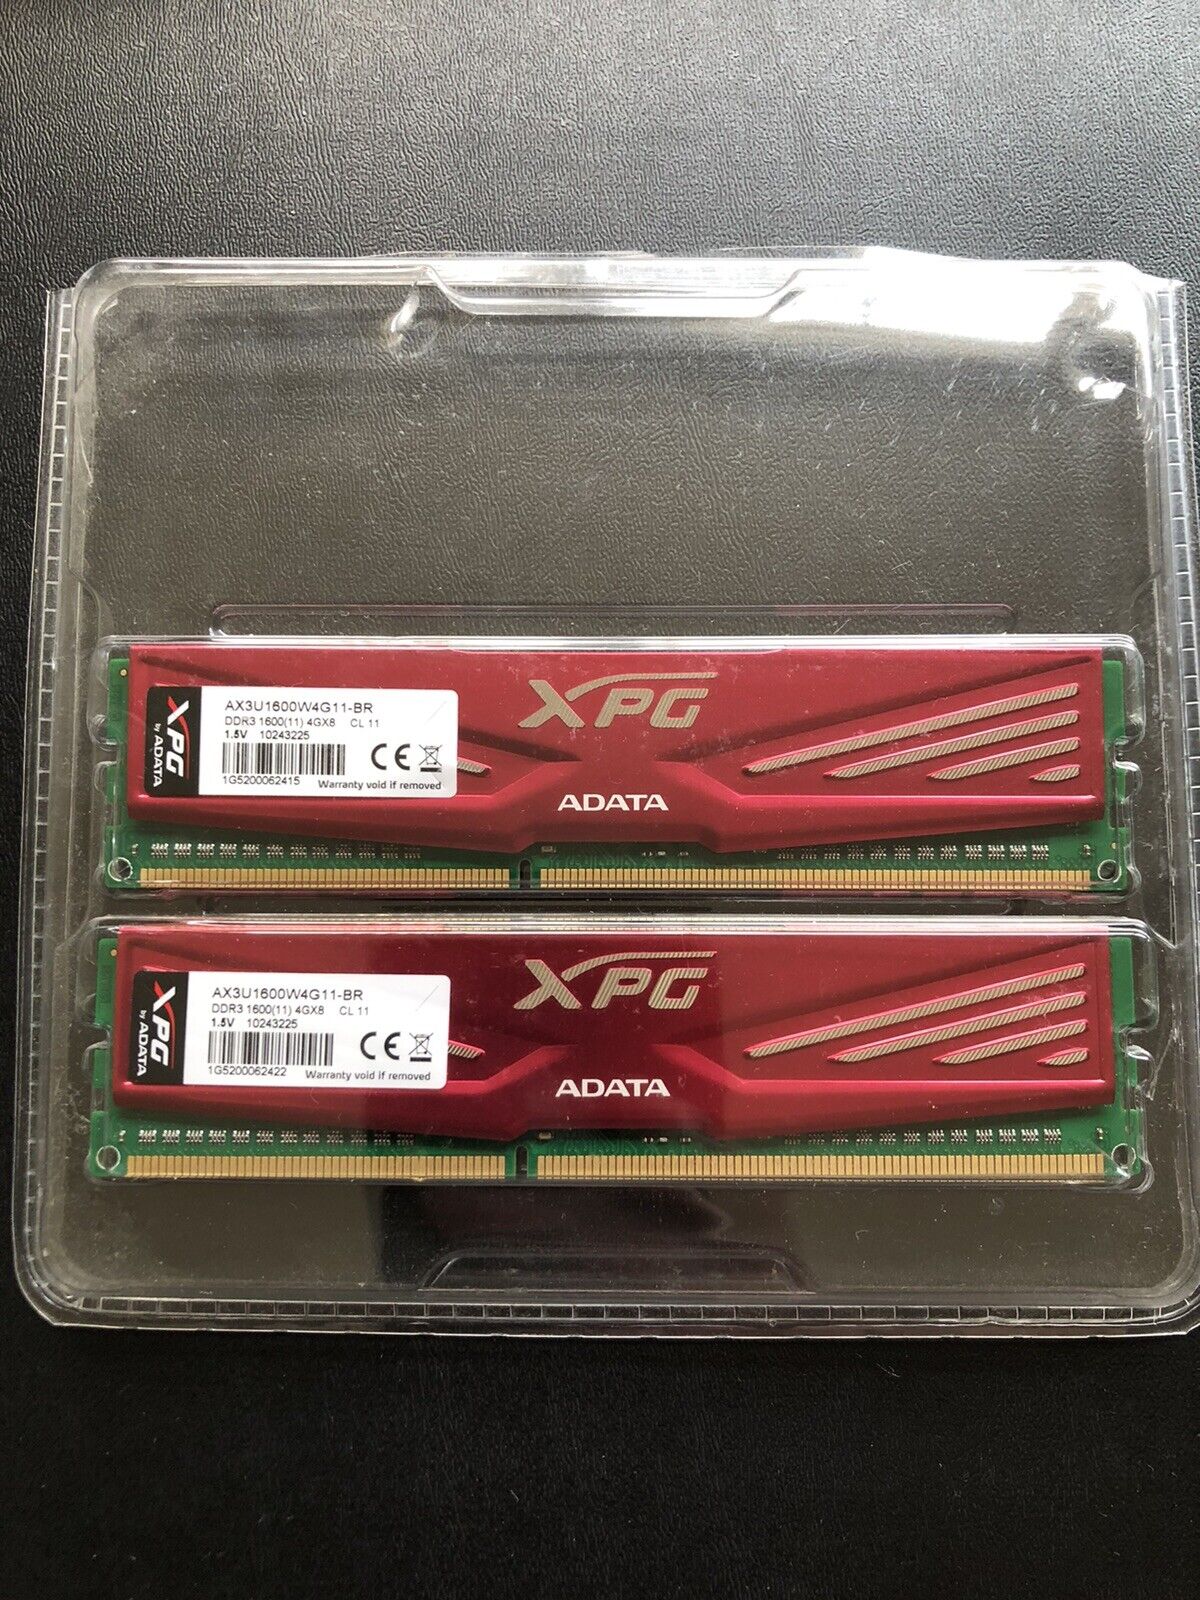 (2X4GB) ADATA XPG DDR3 4GB 1600MHZ CL11 Desktop RAM Memory AX3U1600W4G11-BR. Available Now for 29.99